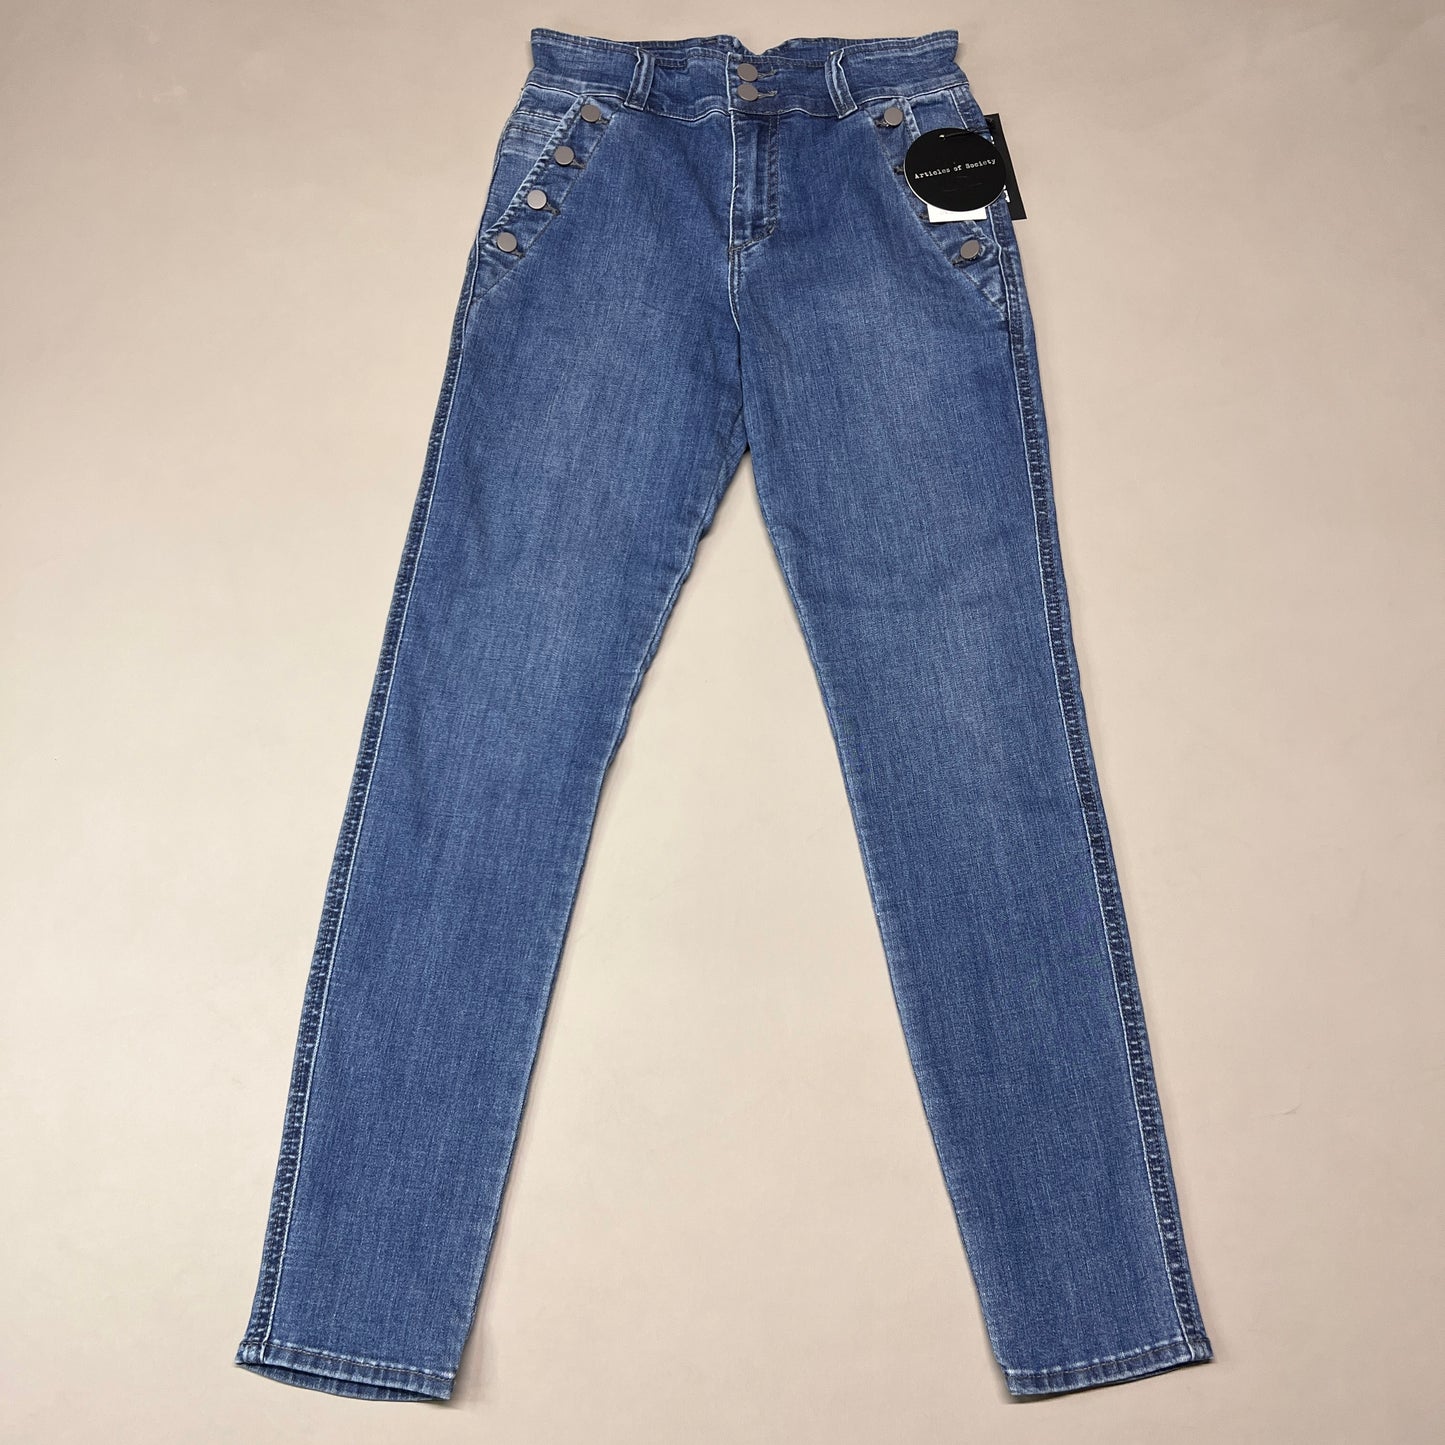 ARTICLES OF SOCIETY Village Park Denim Jeans Women's Sz 27 Blue 4488PLV-731 (New)